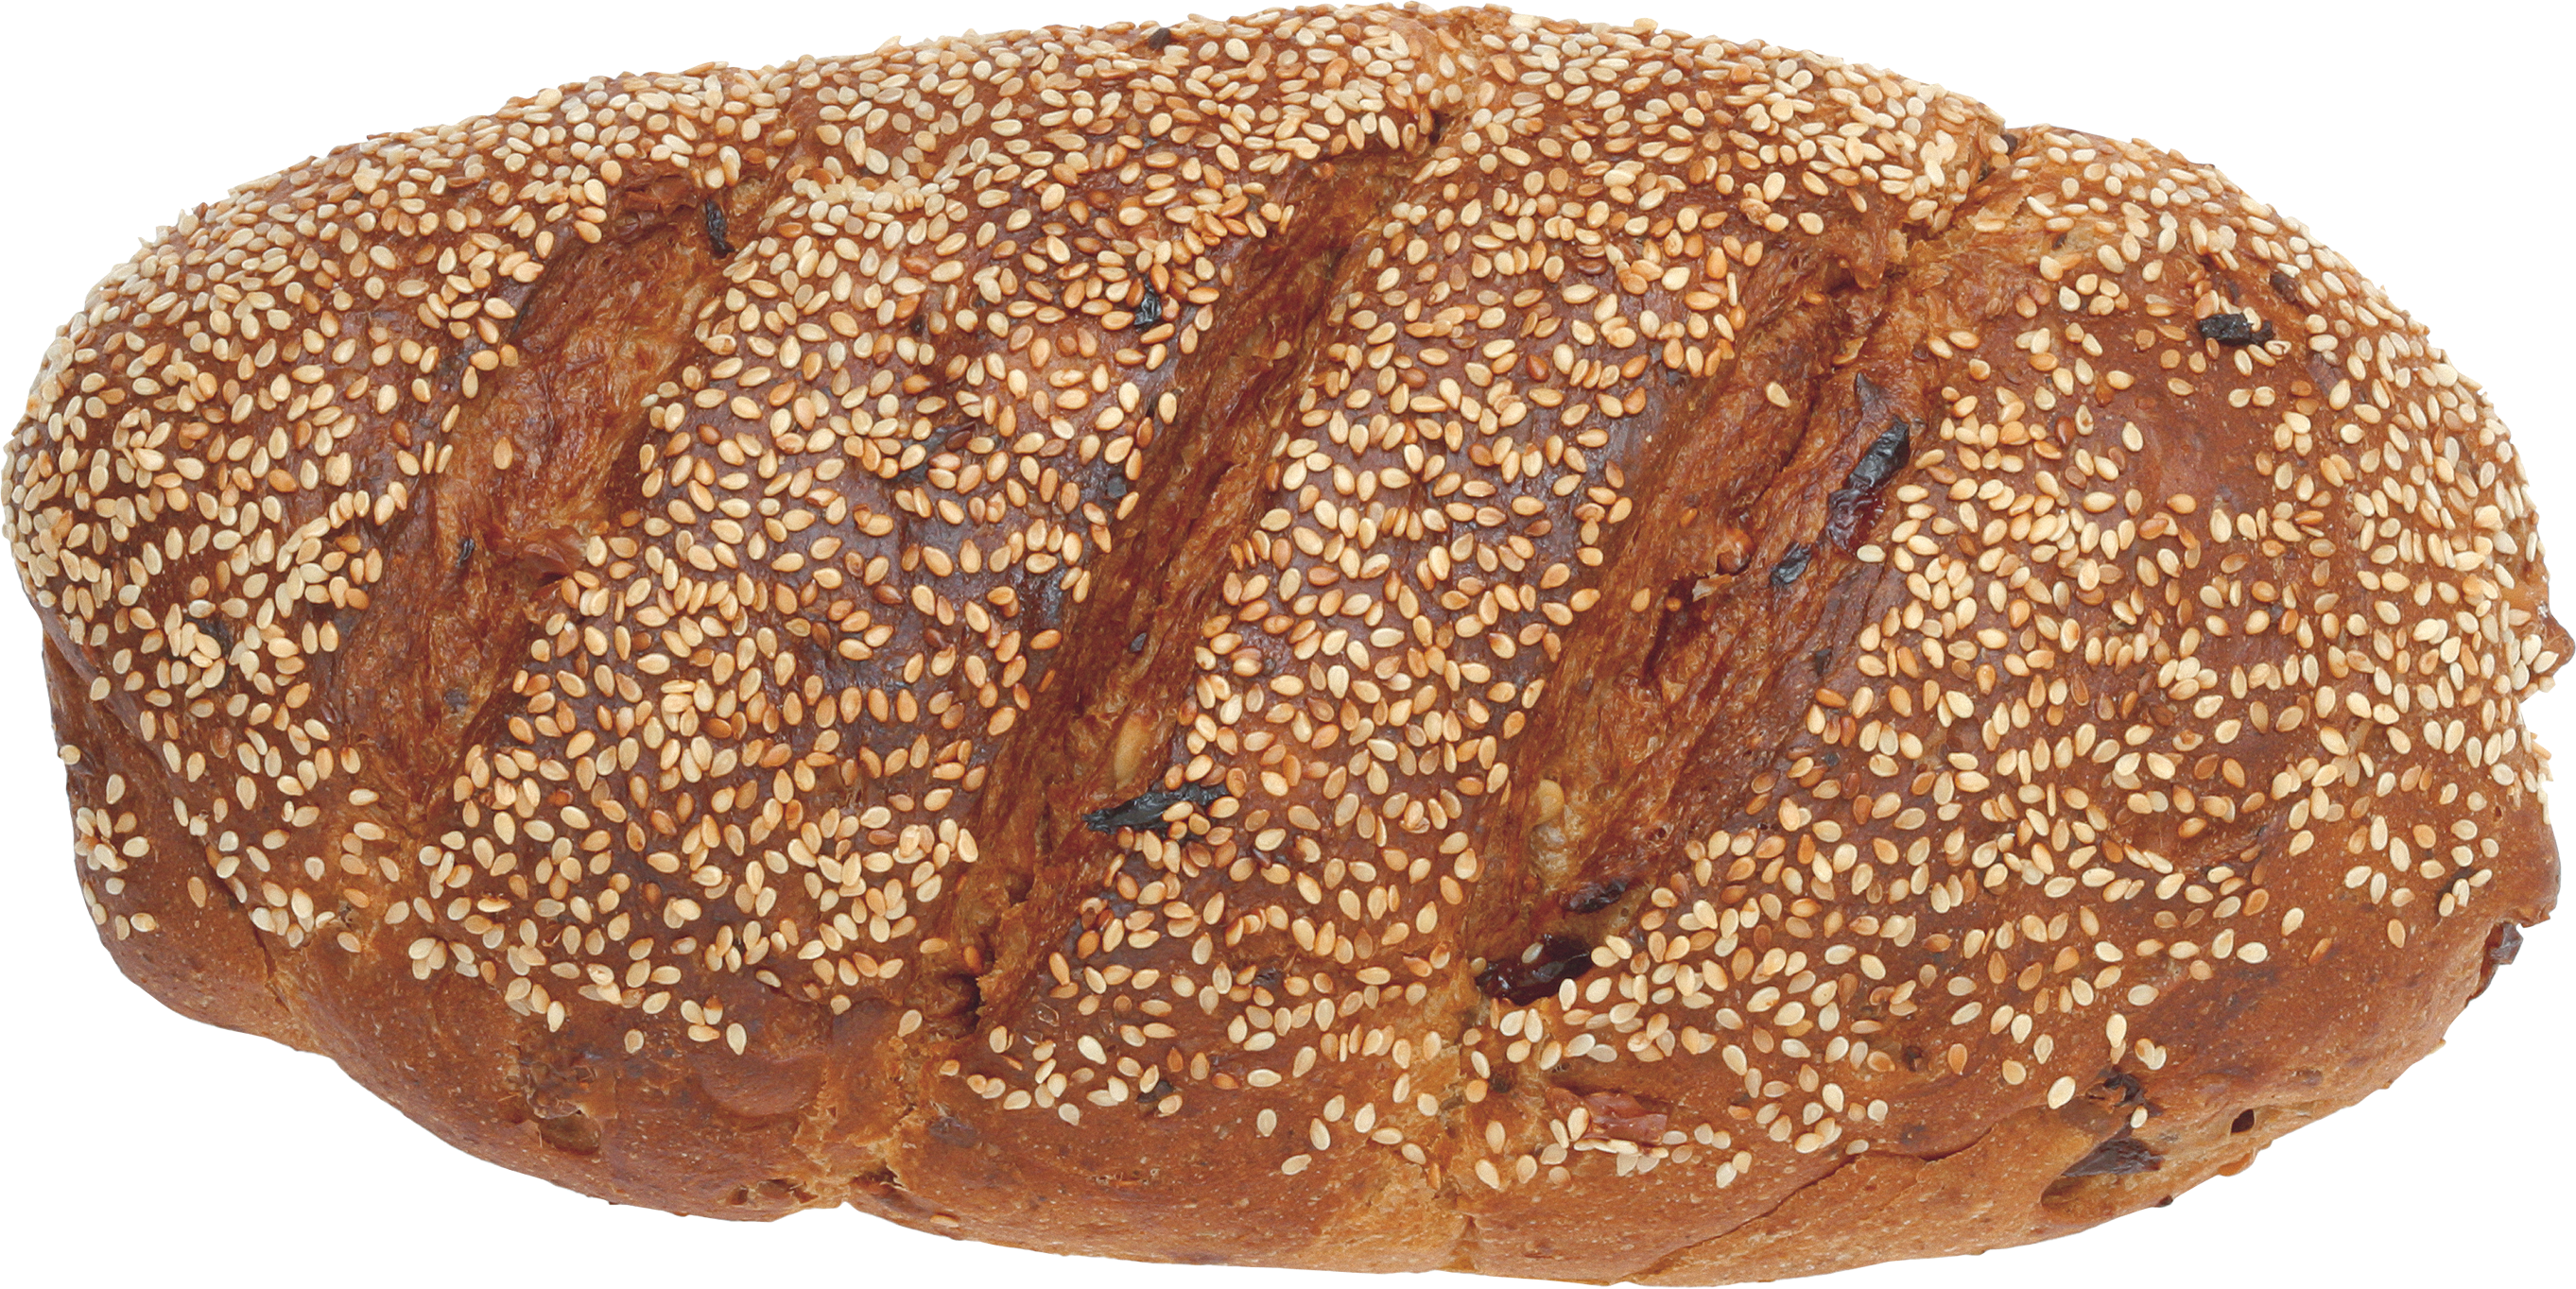 Roti abu-abu